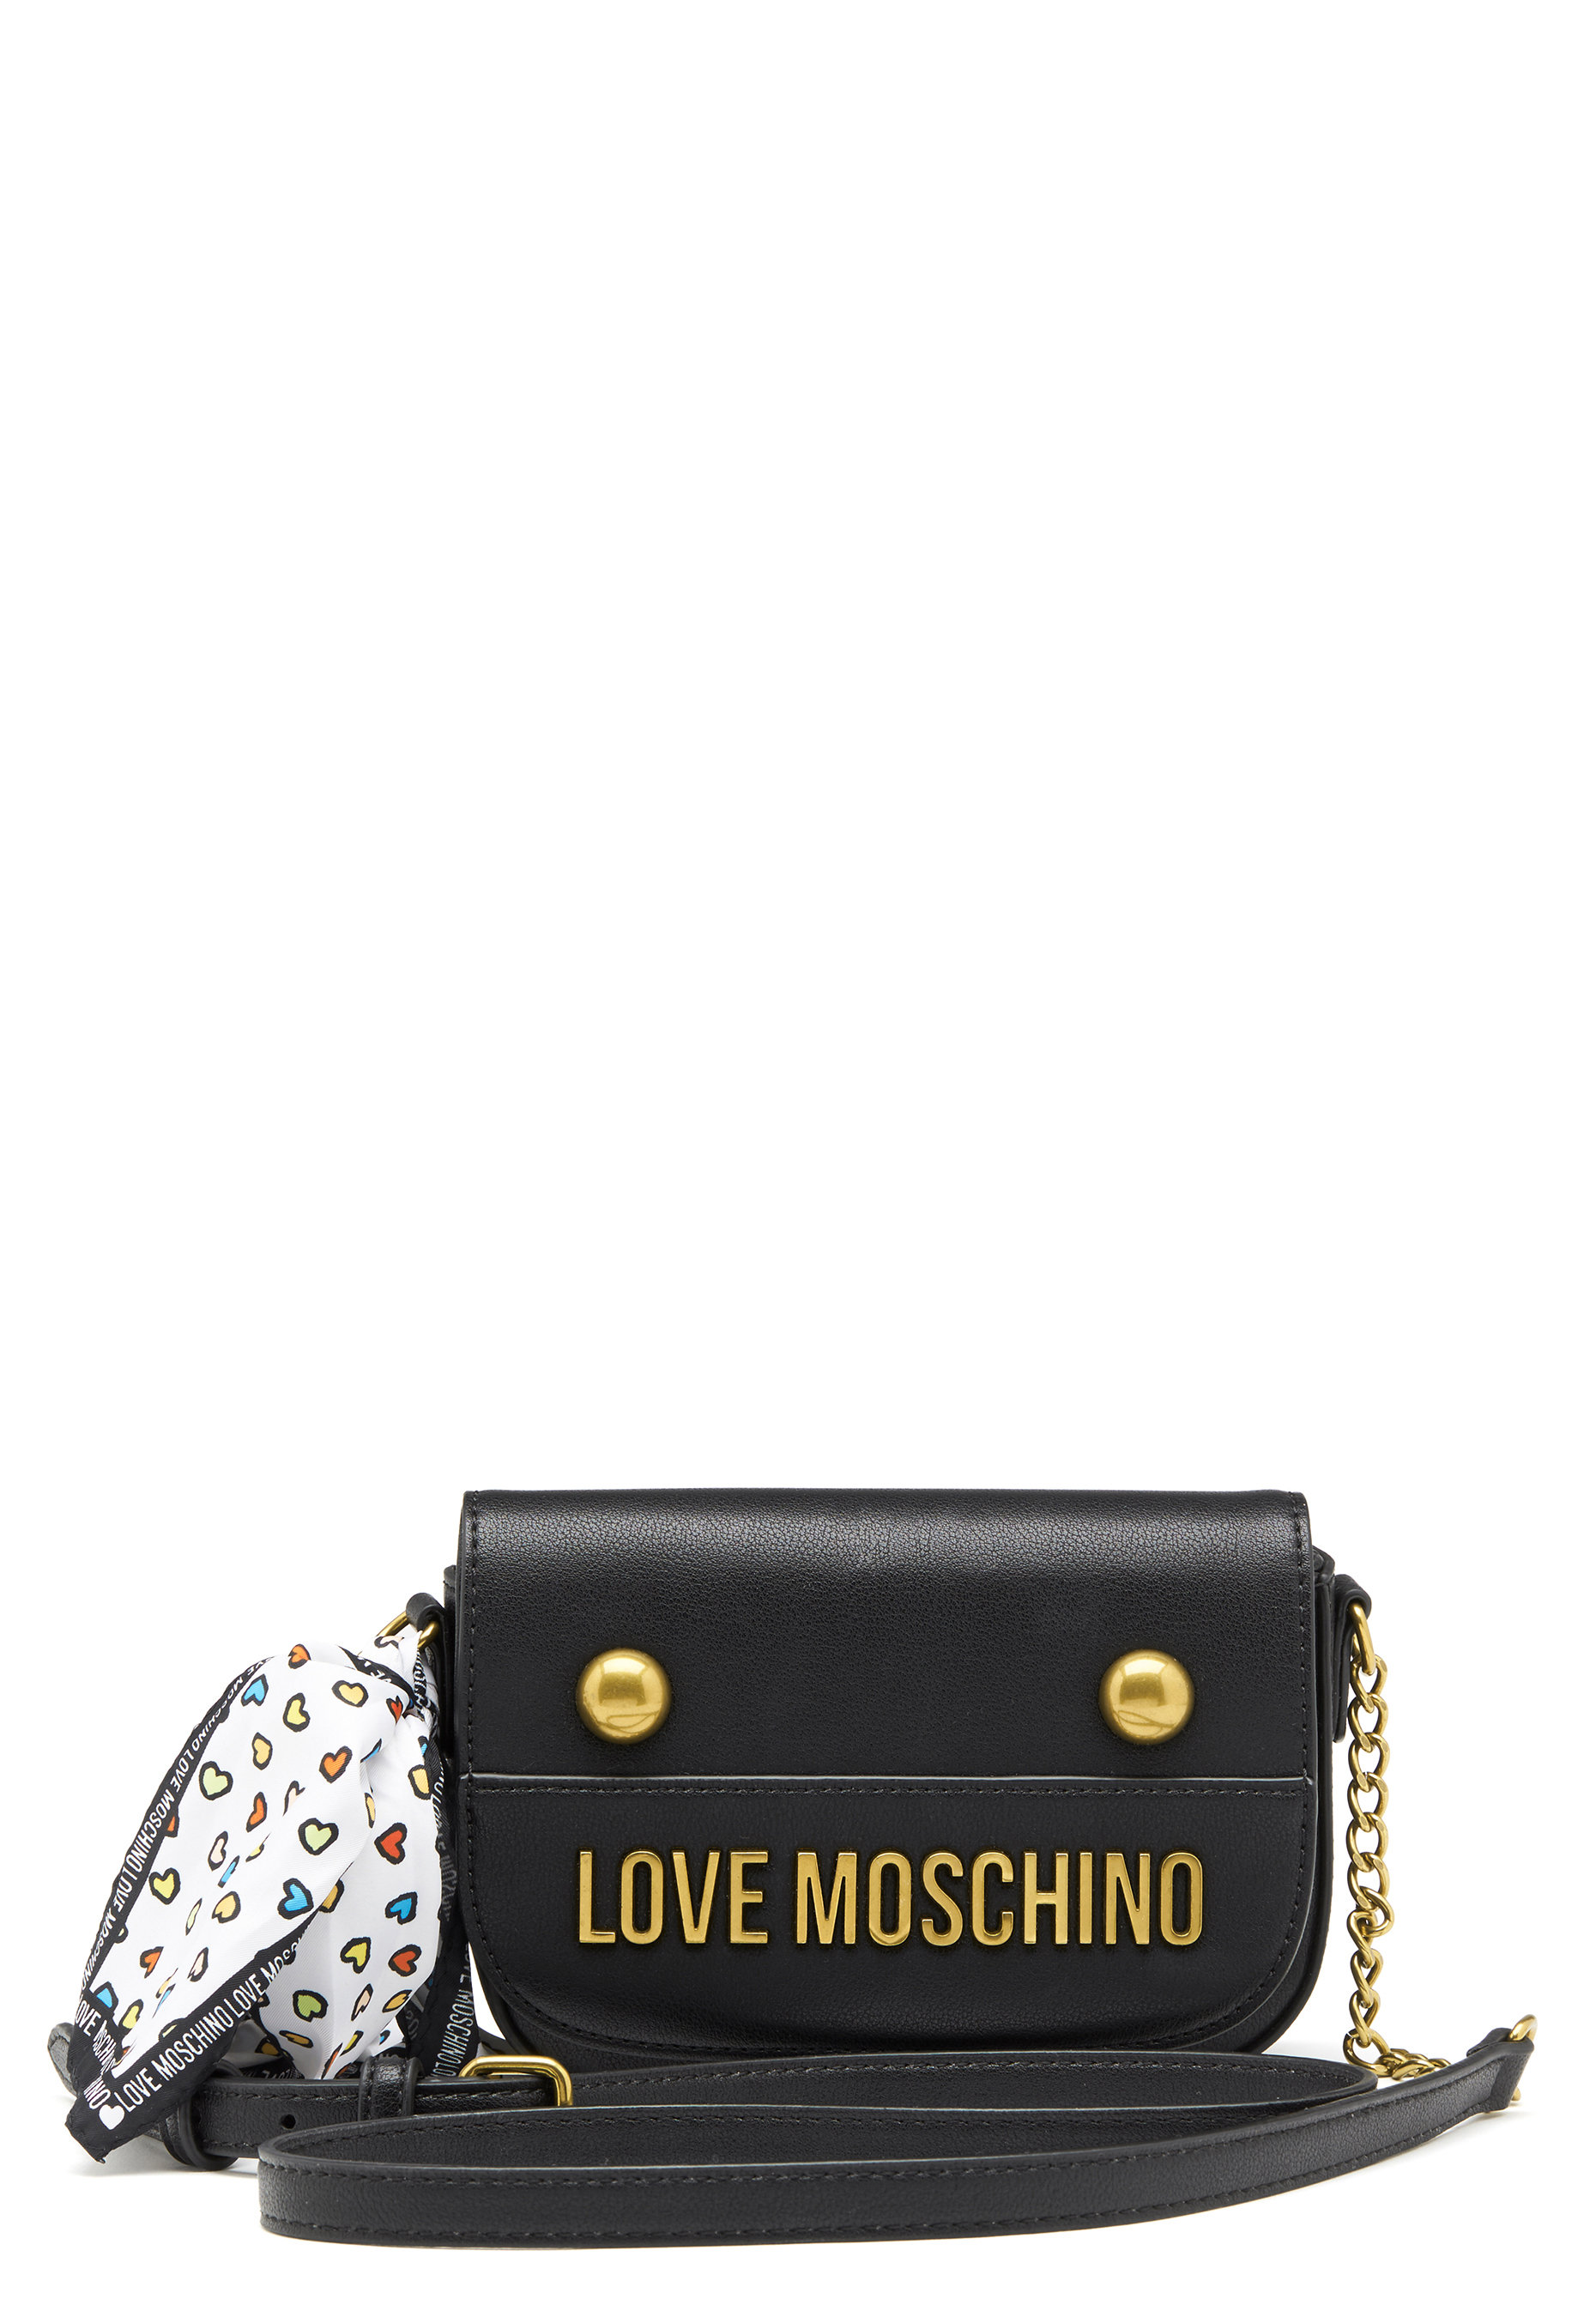 Love Moschino Small Bag 000 Black 